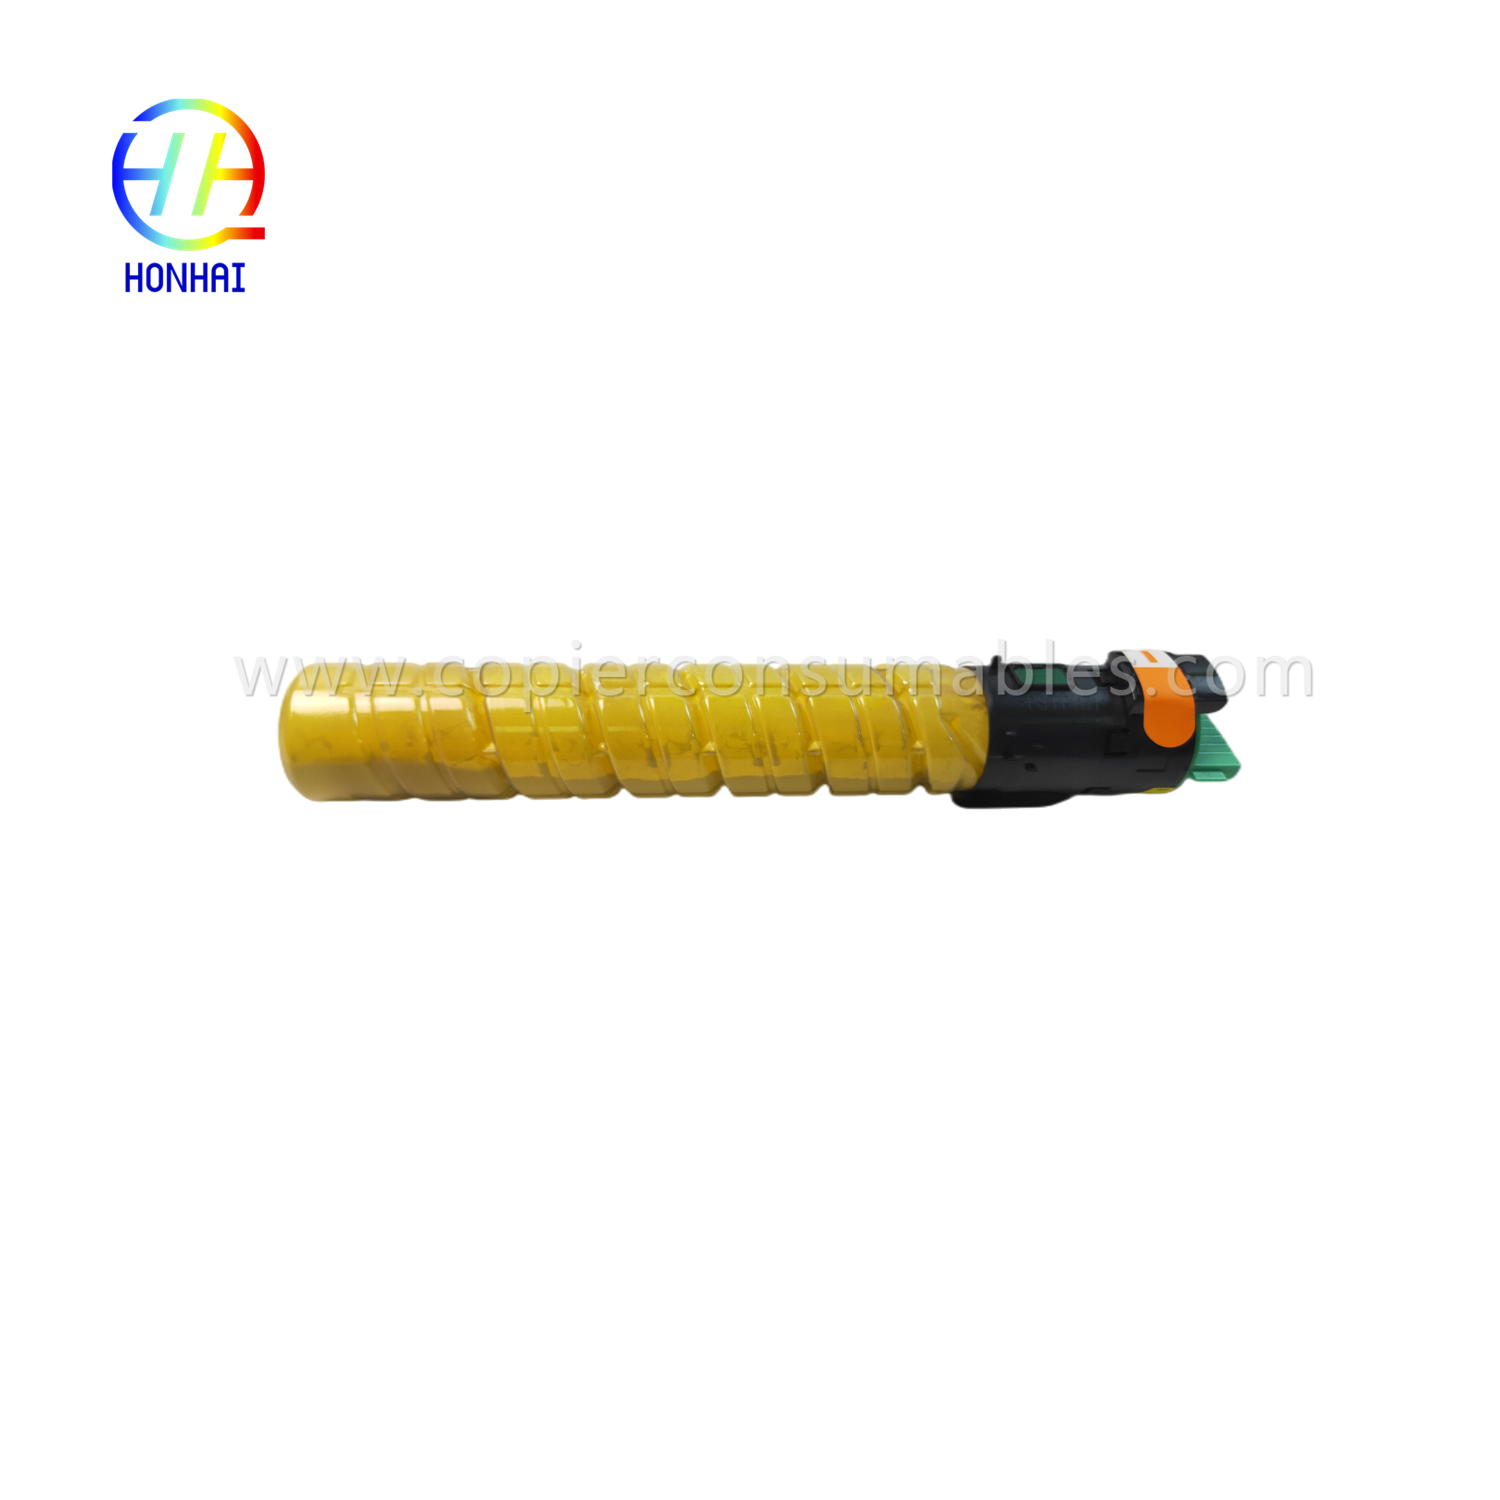 https://c585.goodo.net/toner-cartridge-yellow-for-ricoh-aficio-mpc2051-mpc2551-841501-product/